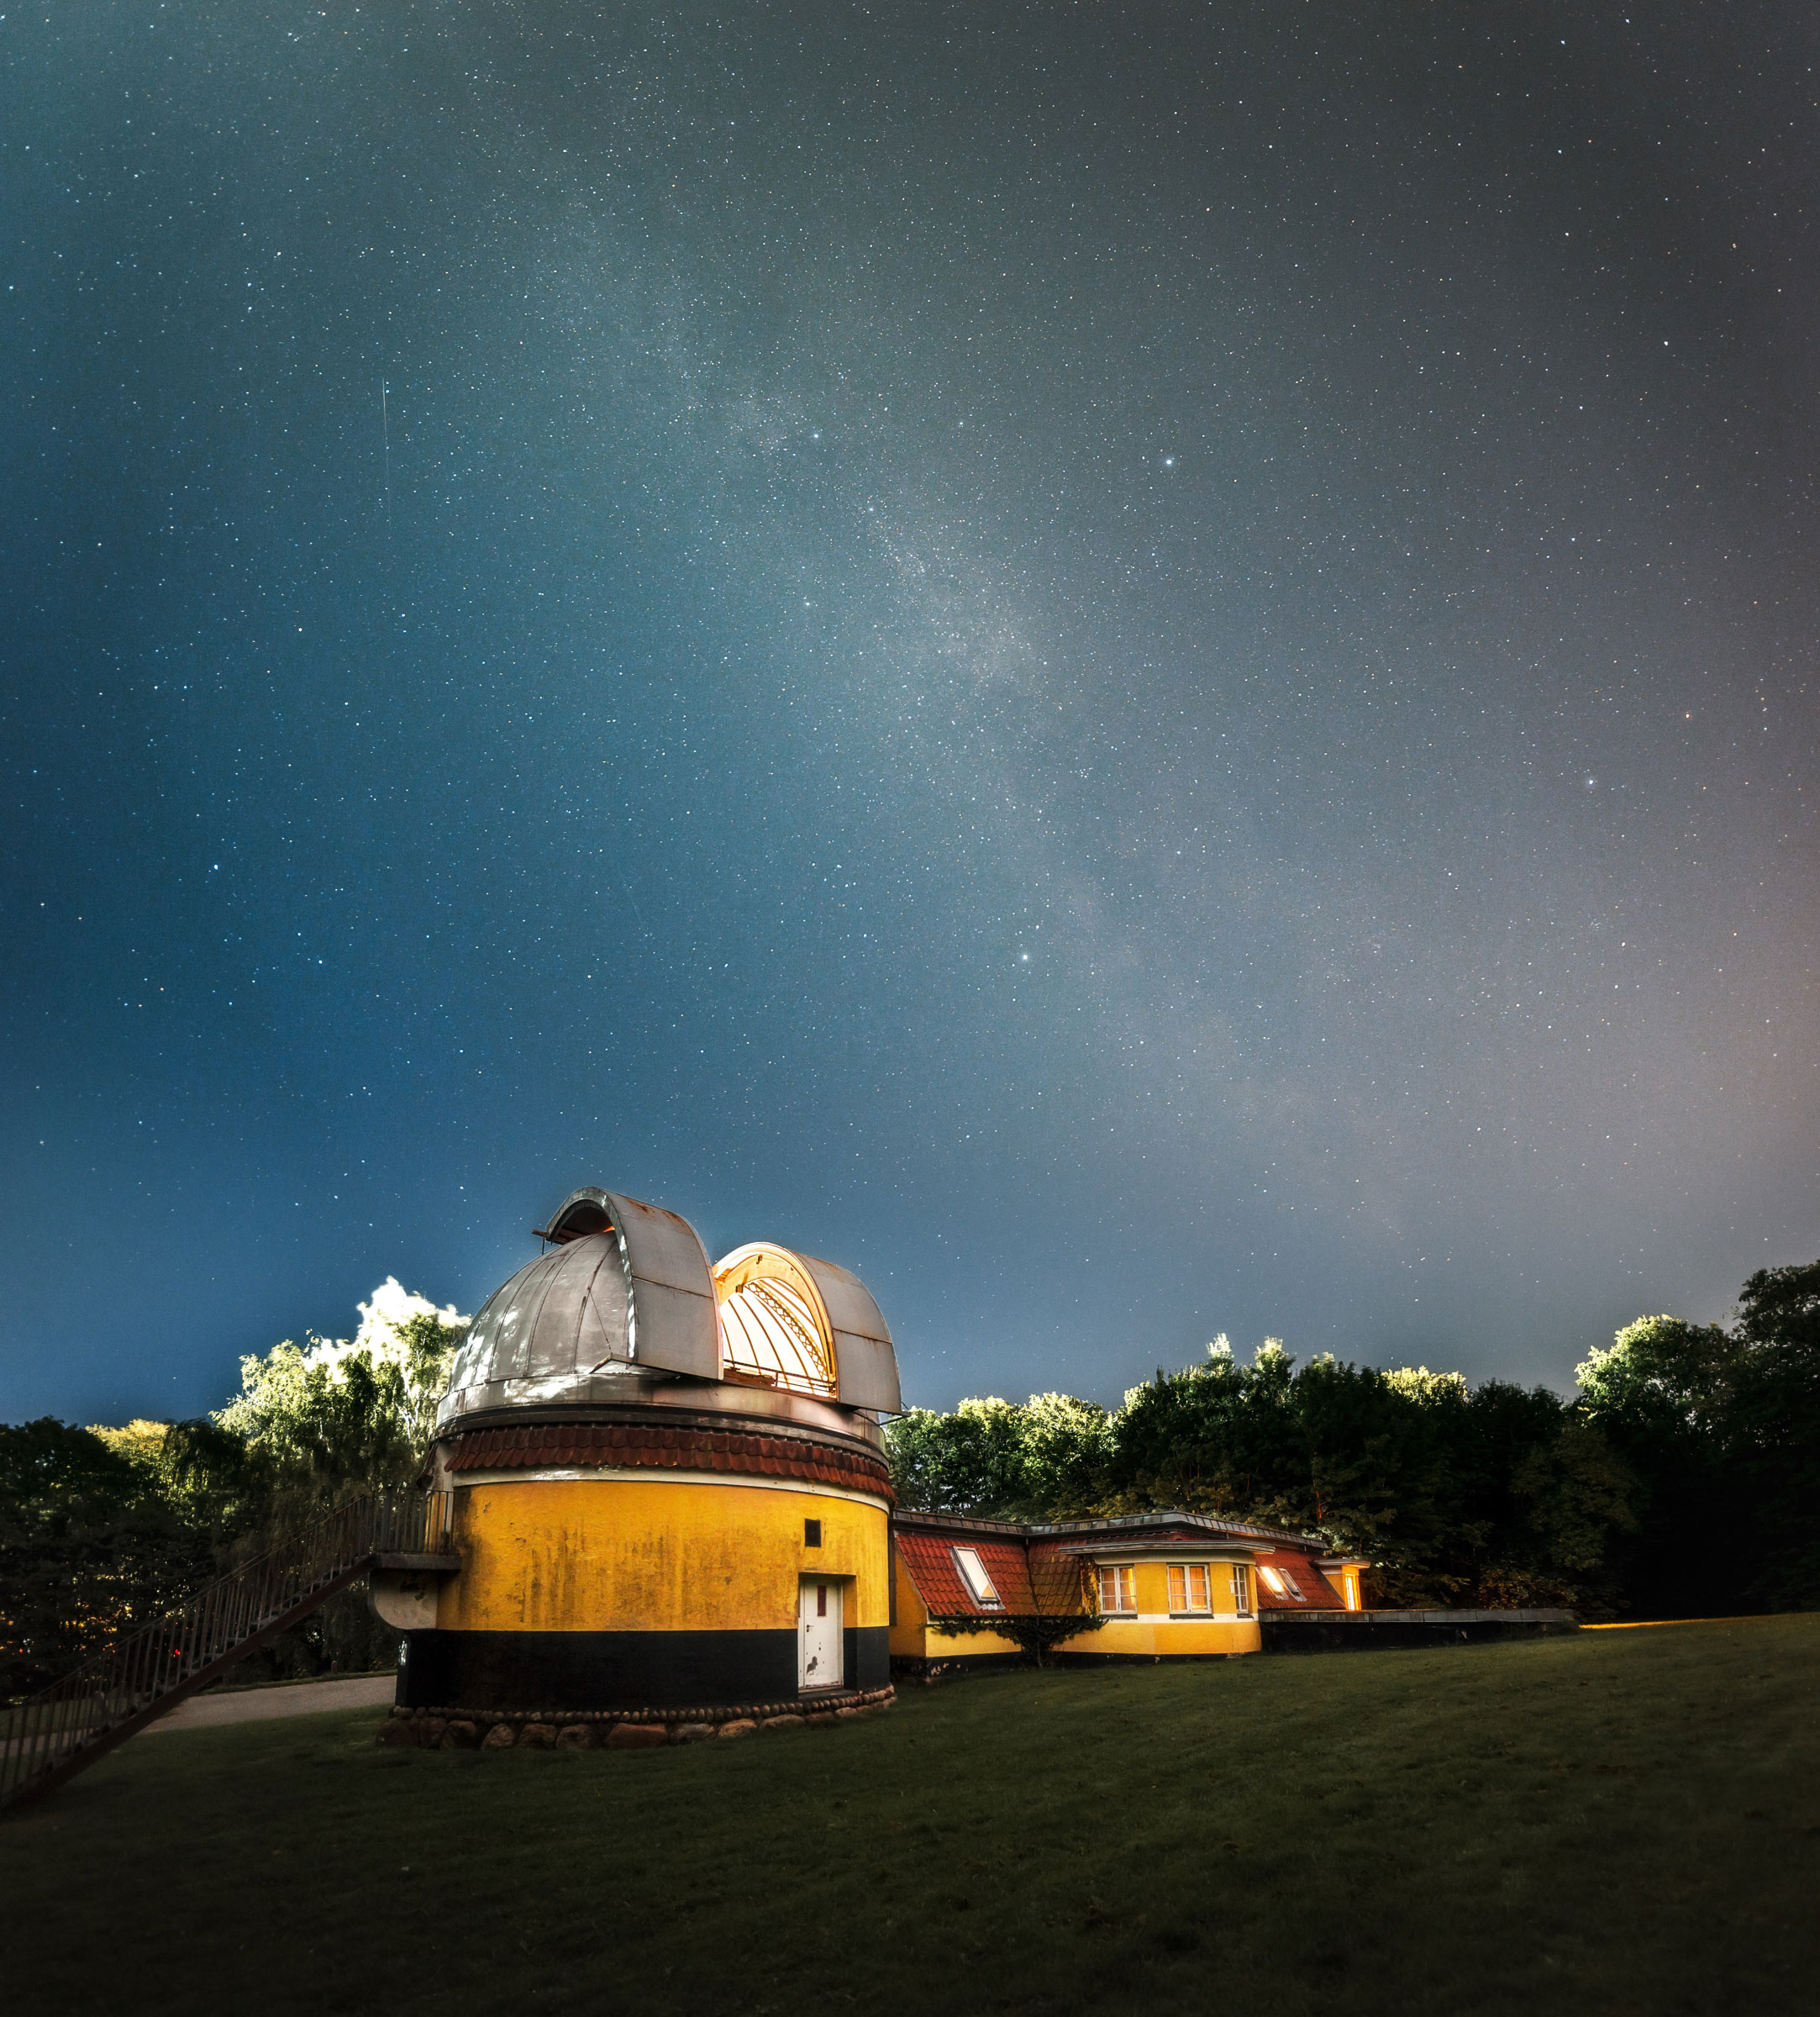 The Ole Rømer Observatory Science Park in Aarhus, Denmark.